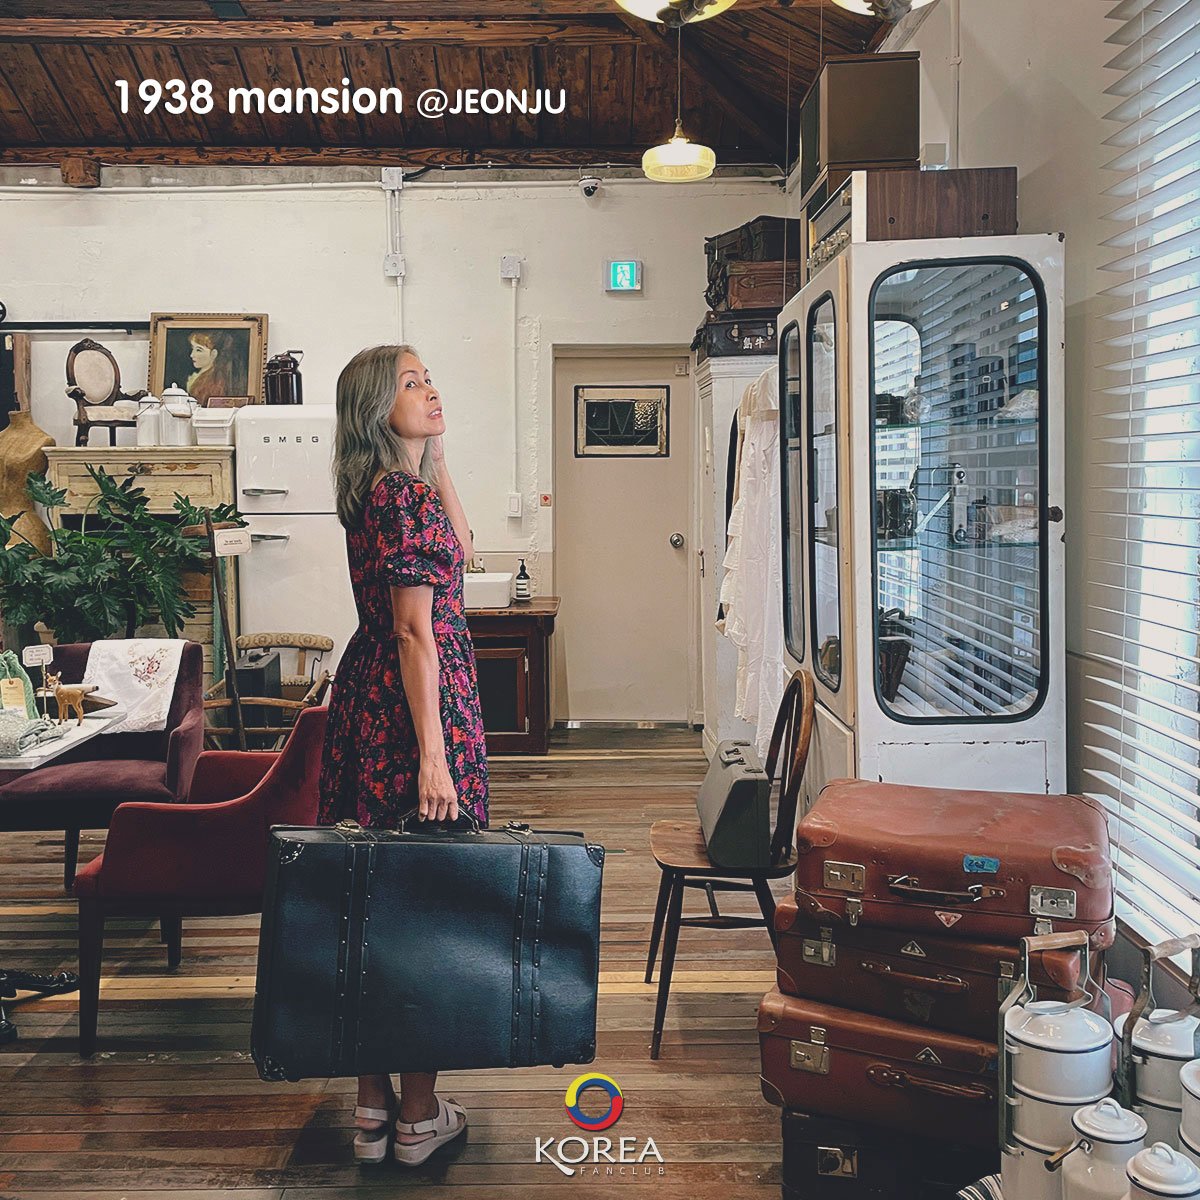 1938 mansion Cafe : คาเฟ่ นักเดินทางข้ามเวลา เมืองจอนจู Jeonju